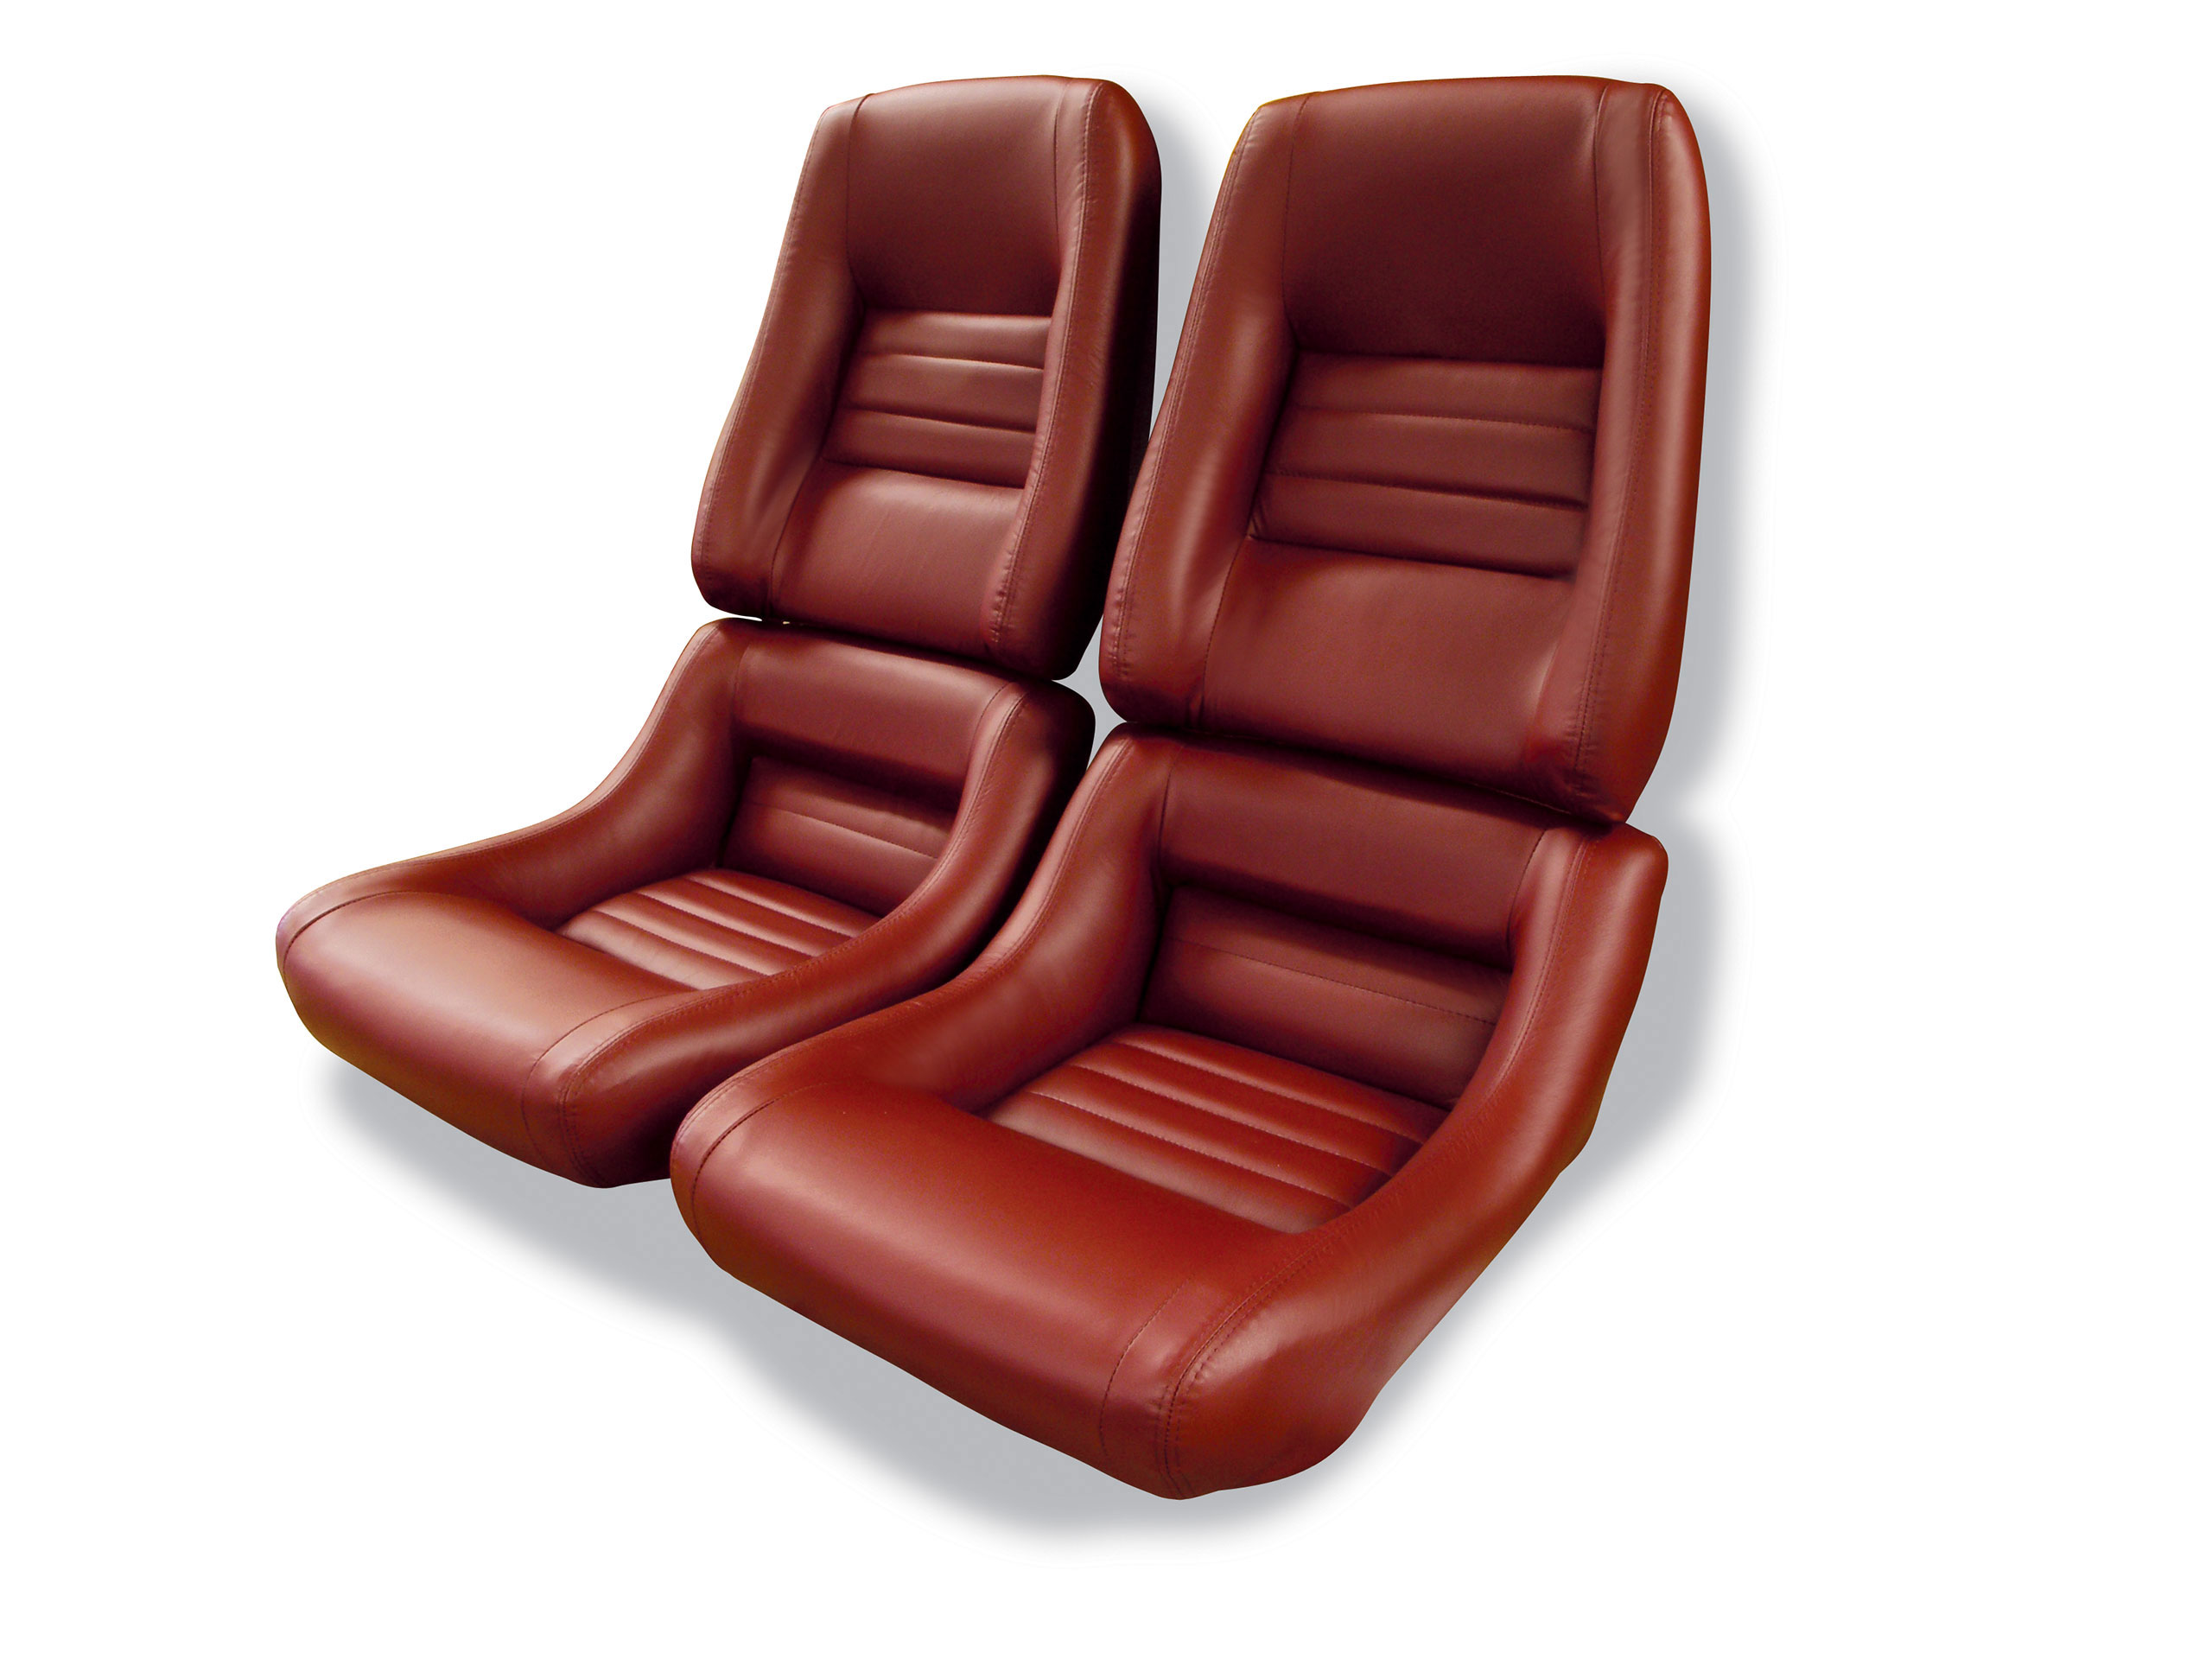 1982 Corvette C3 "Leather-Like" Vinyl Seat Covers Red 4" Bolster CA-421726 